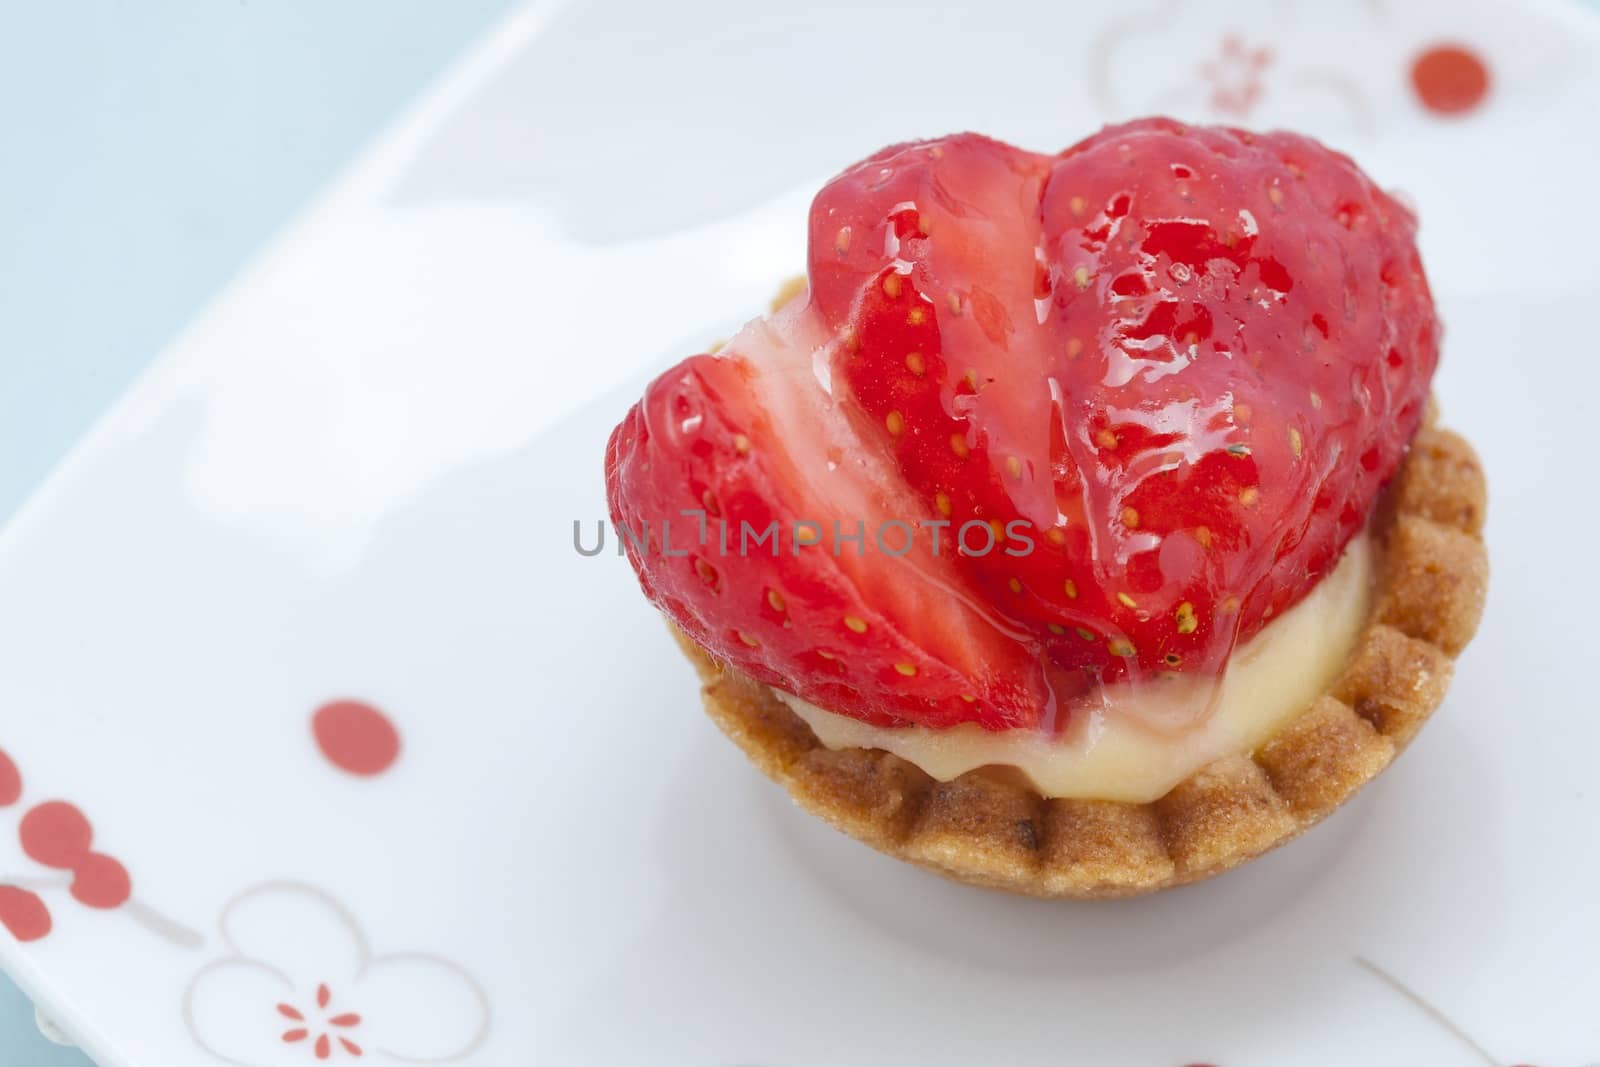 Strawberry dessert by Onigiristudio